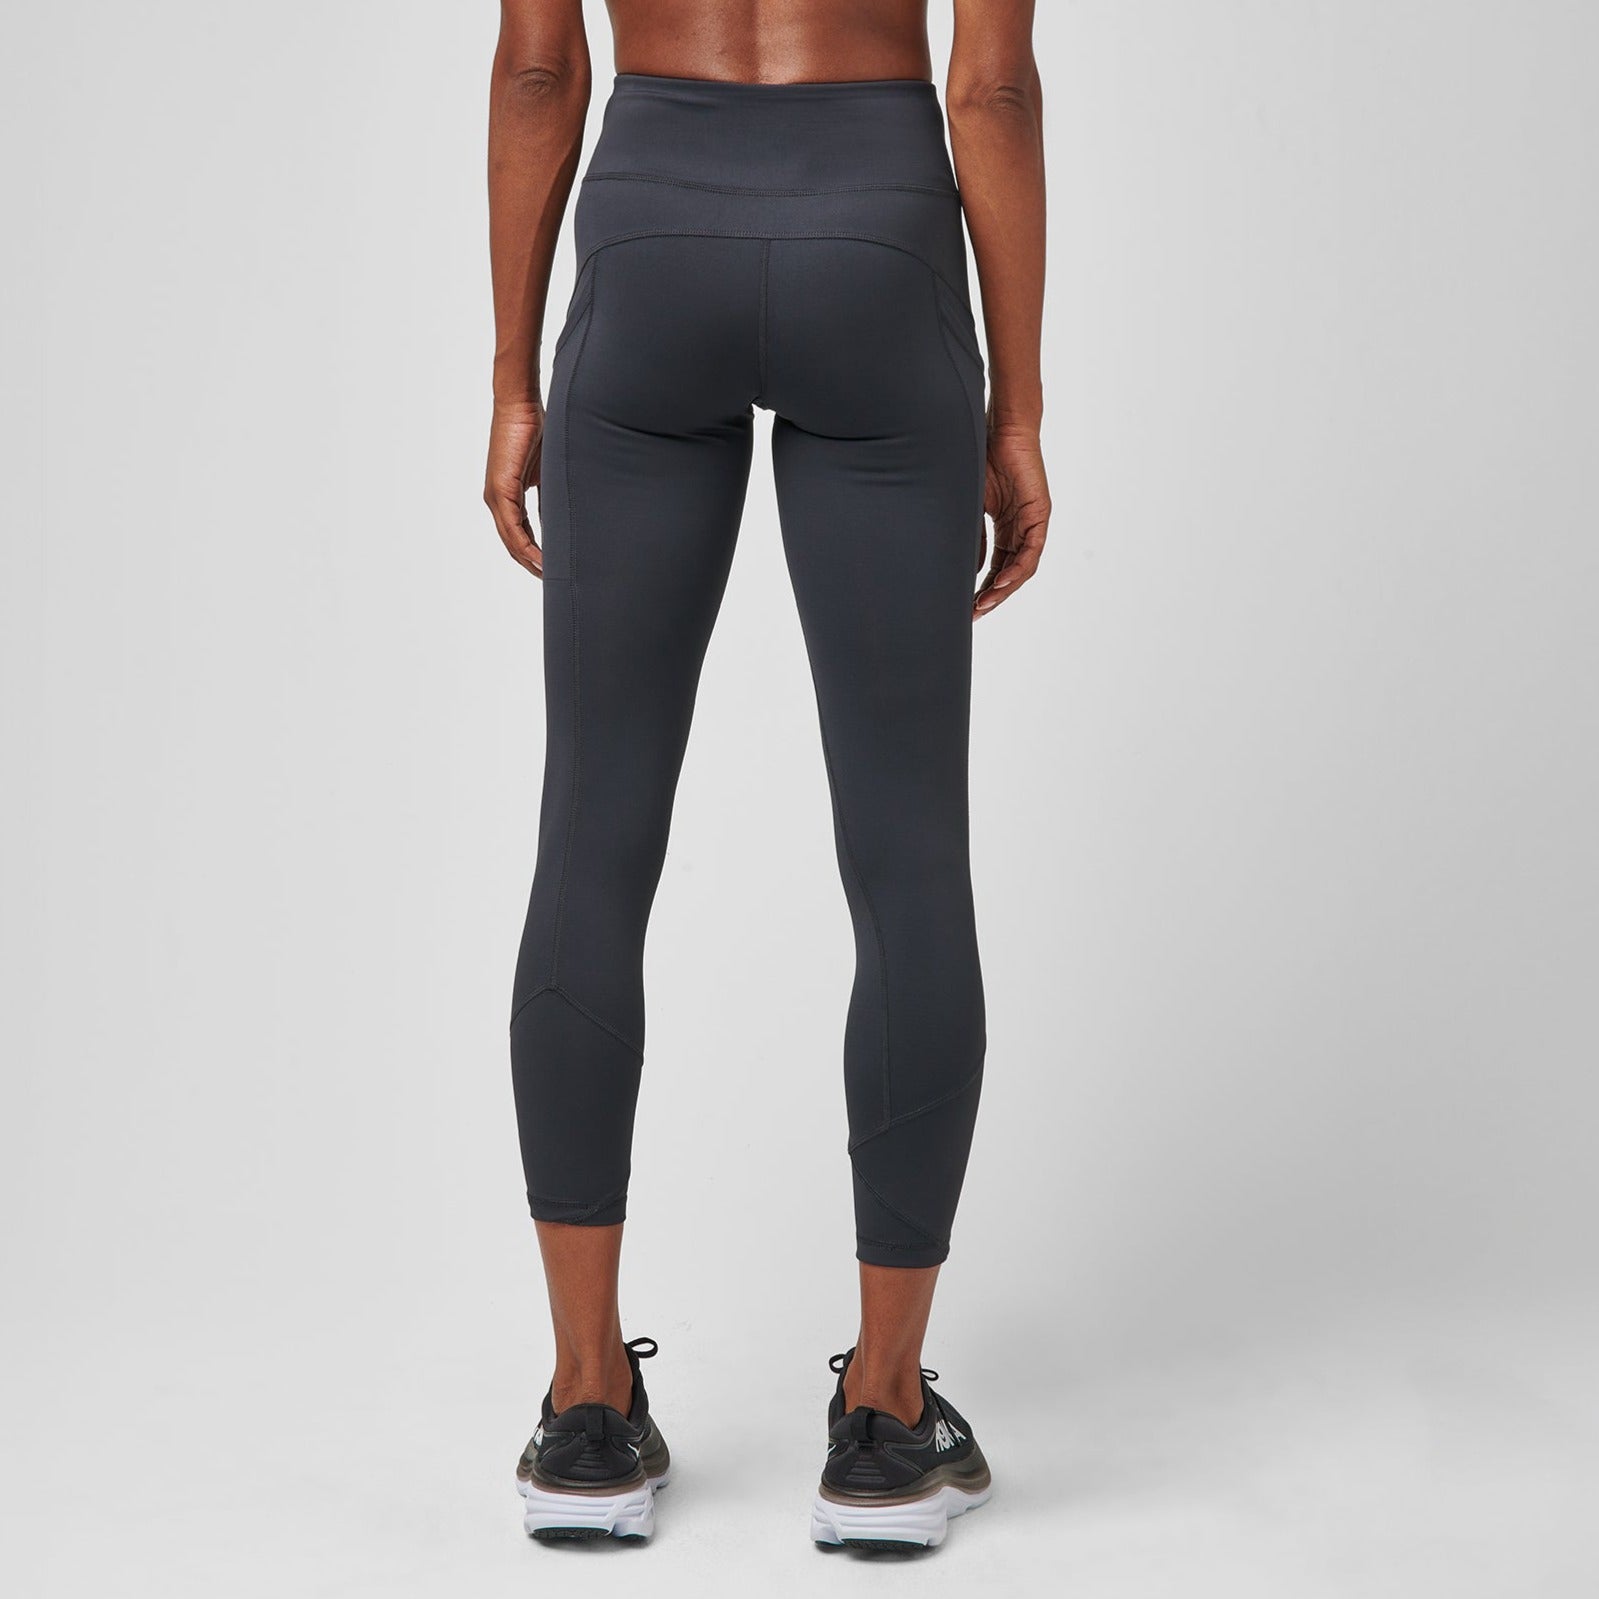 Lululemon Leggings Size 6 Heather Black Charcoal Gray Athletic Workout